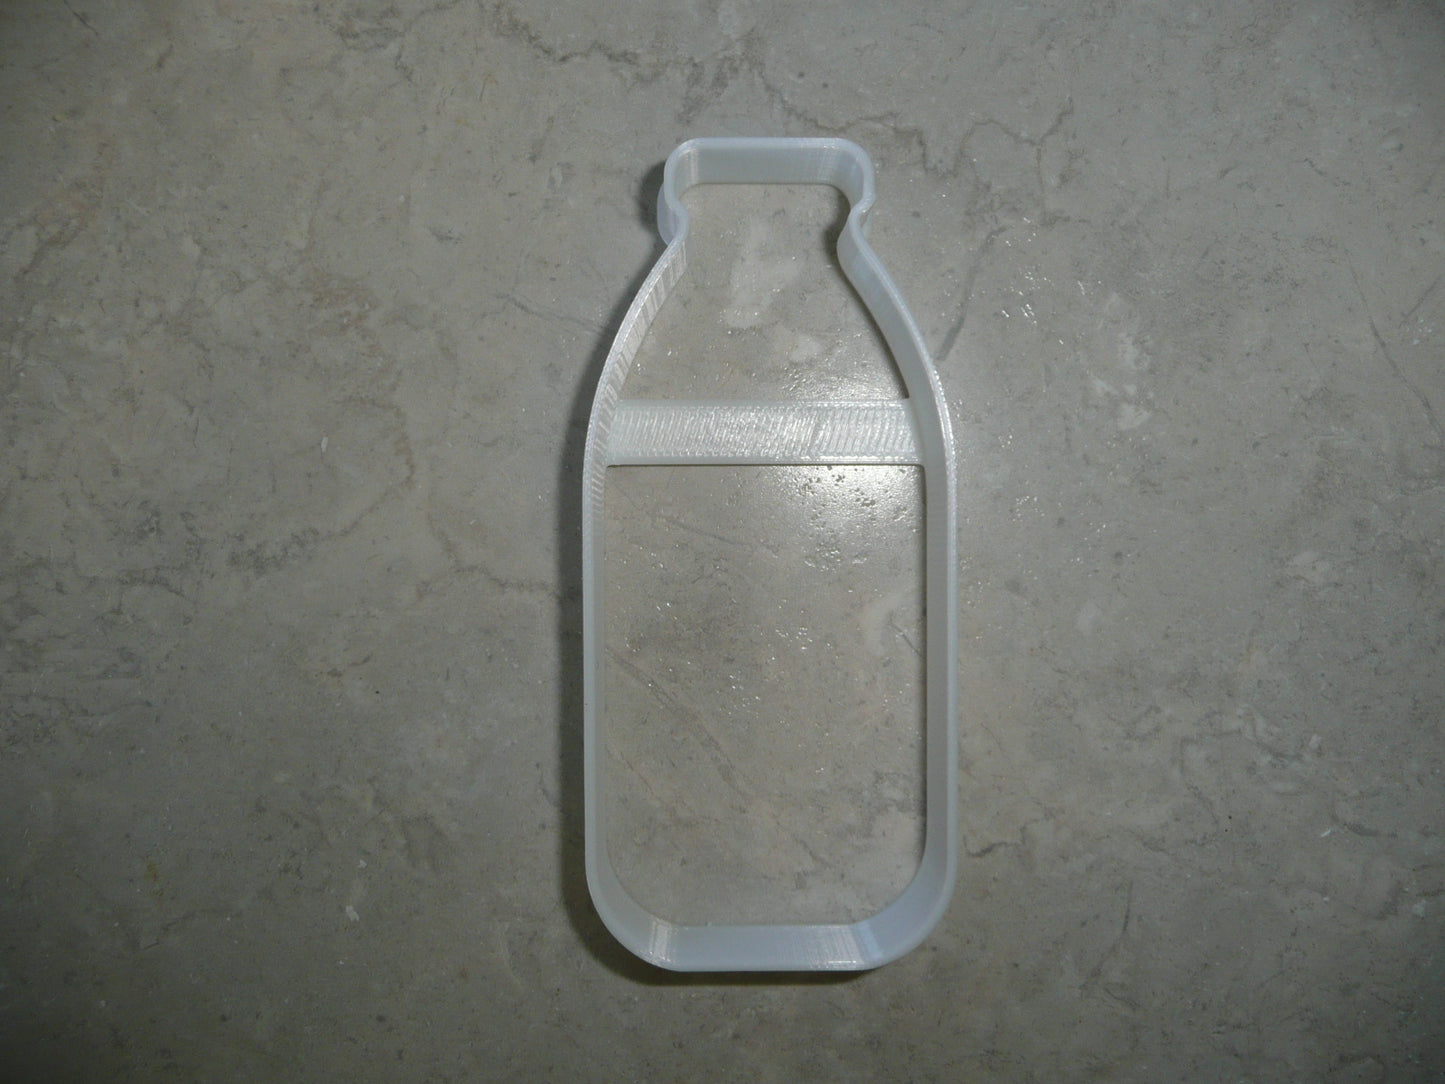 6x Vintage Milk Bottle Jar Fondant Cutter Cupcake Topper 1.75 IN USA FD5028